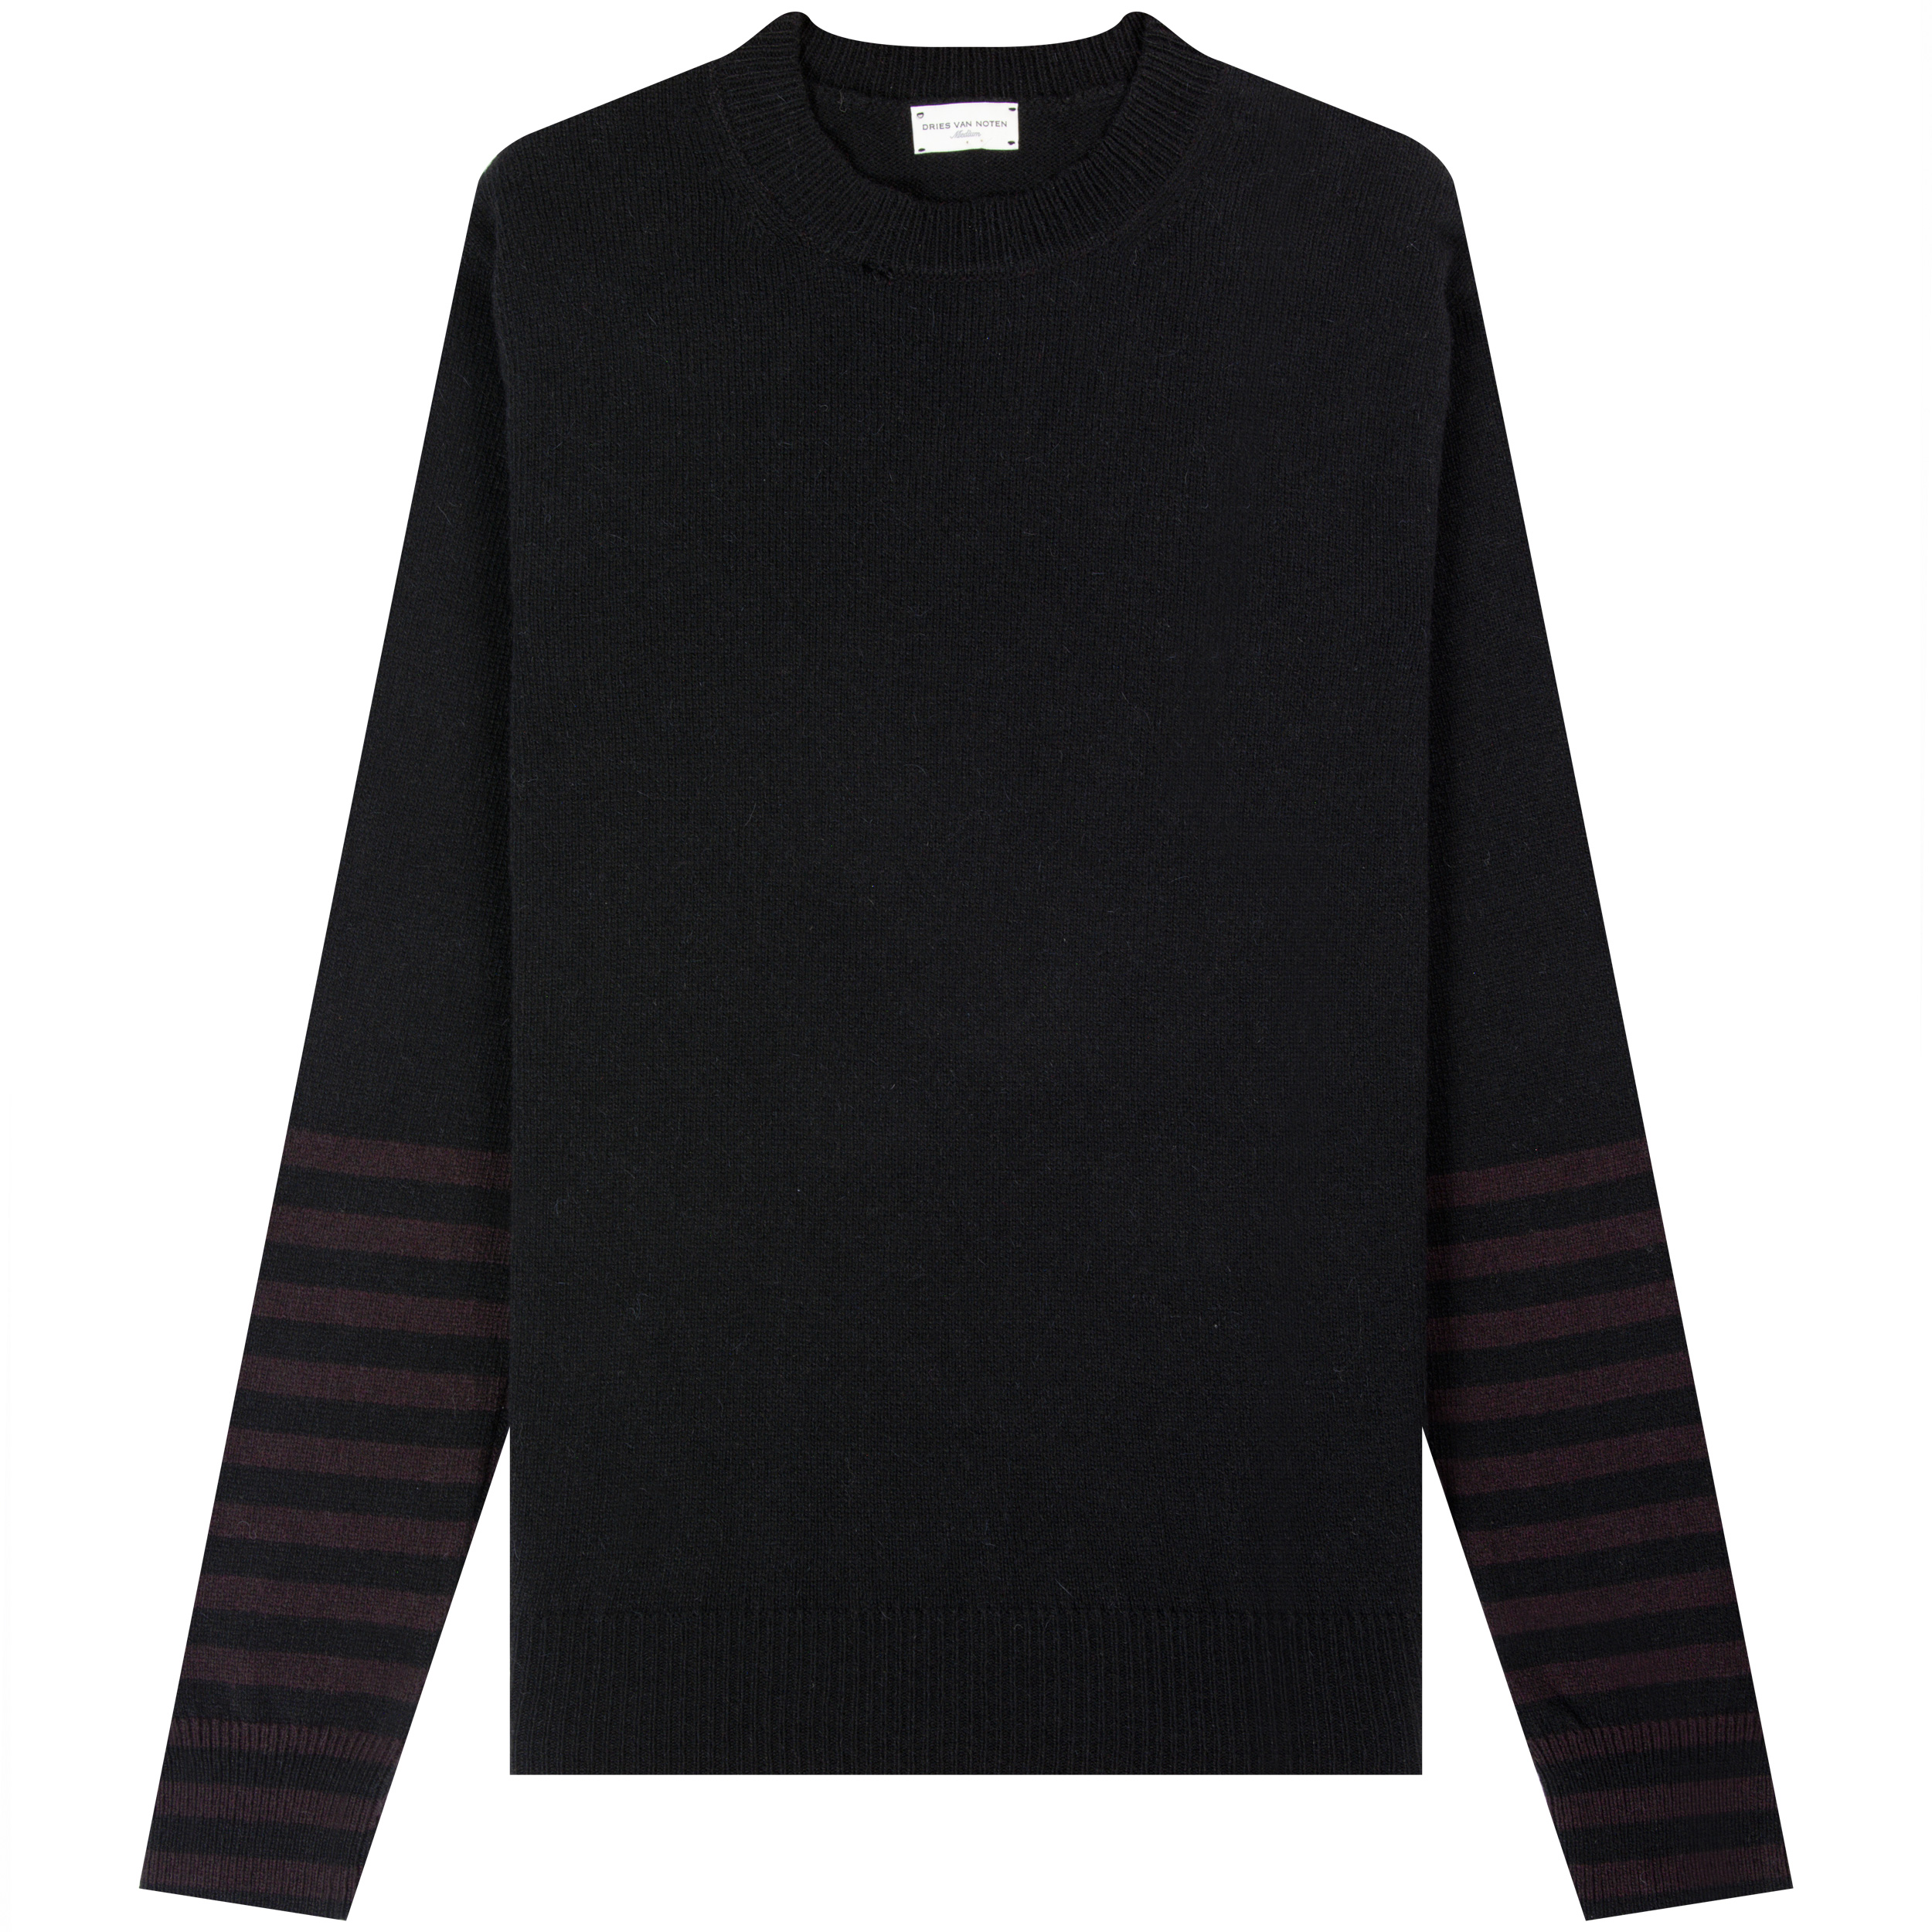 Dries Van Noten ’Classic Striped’ Crewneck Knit Black / Red